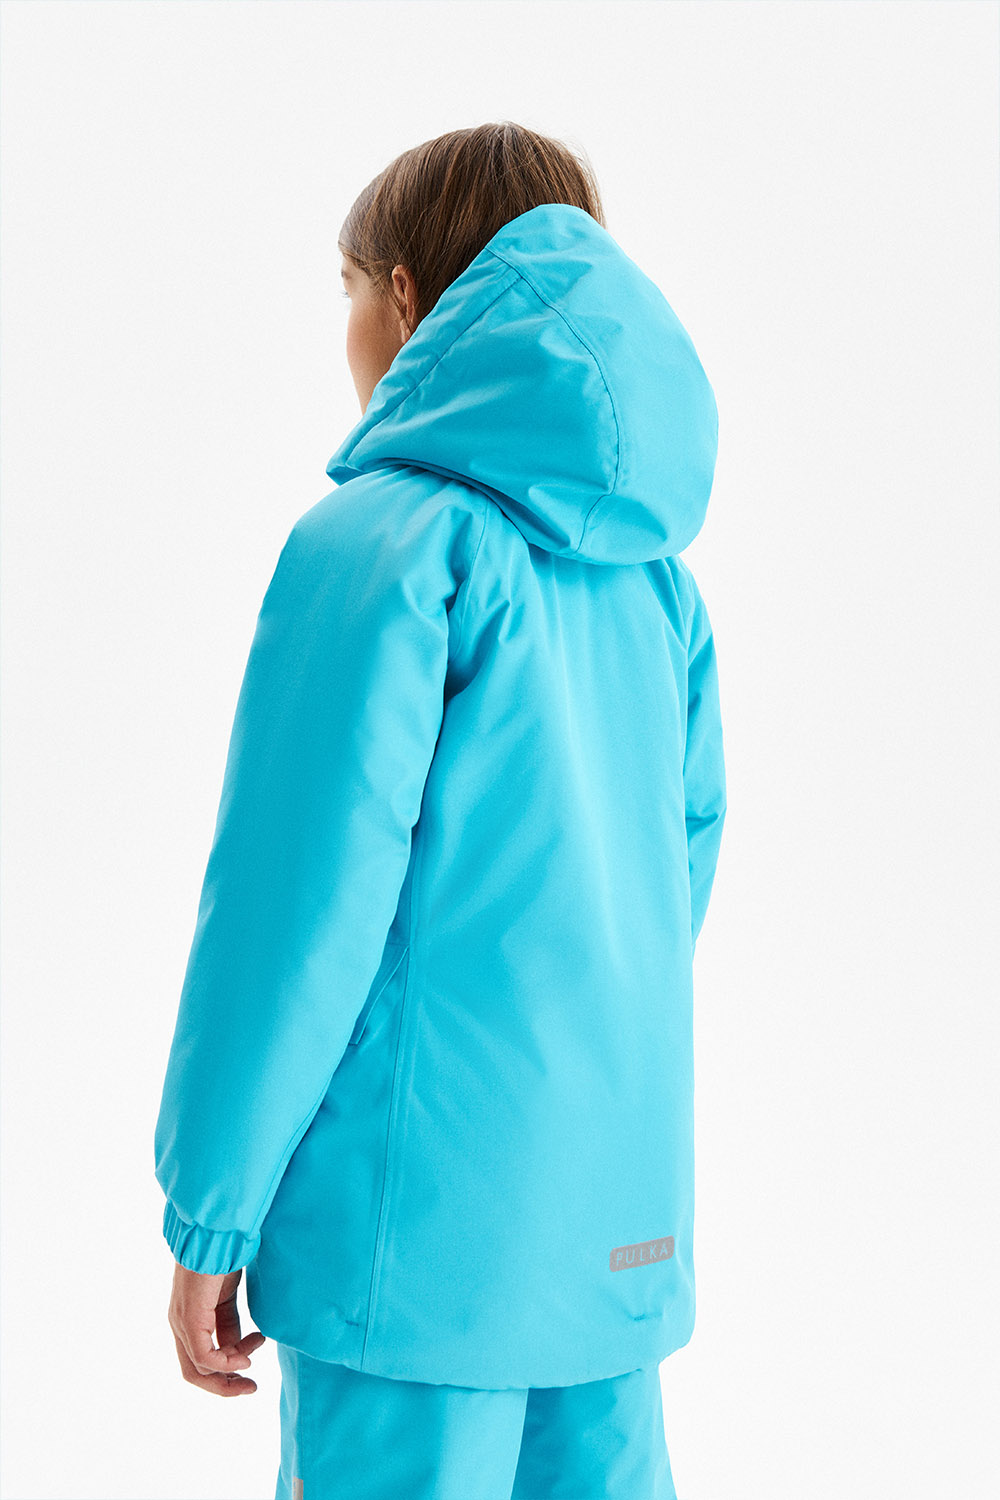 Зимняя куртка из мембраны с капюшоном унисекс (PUAWU-316-30107-380) Silver Spoon